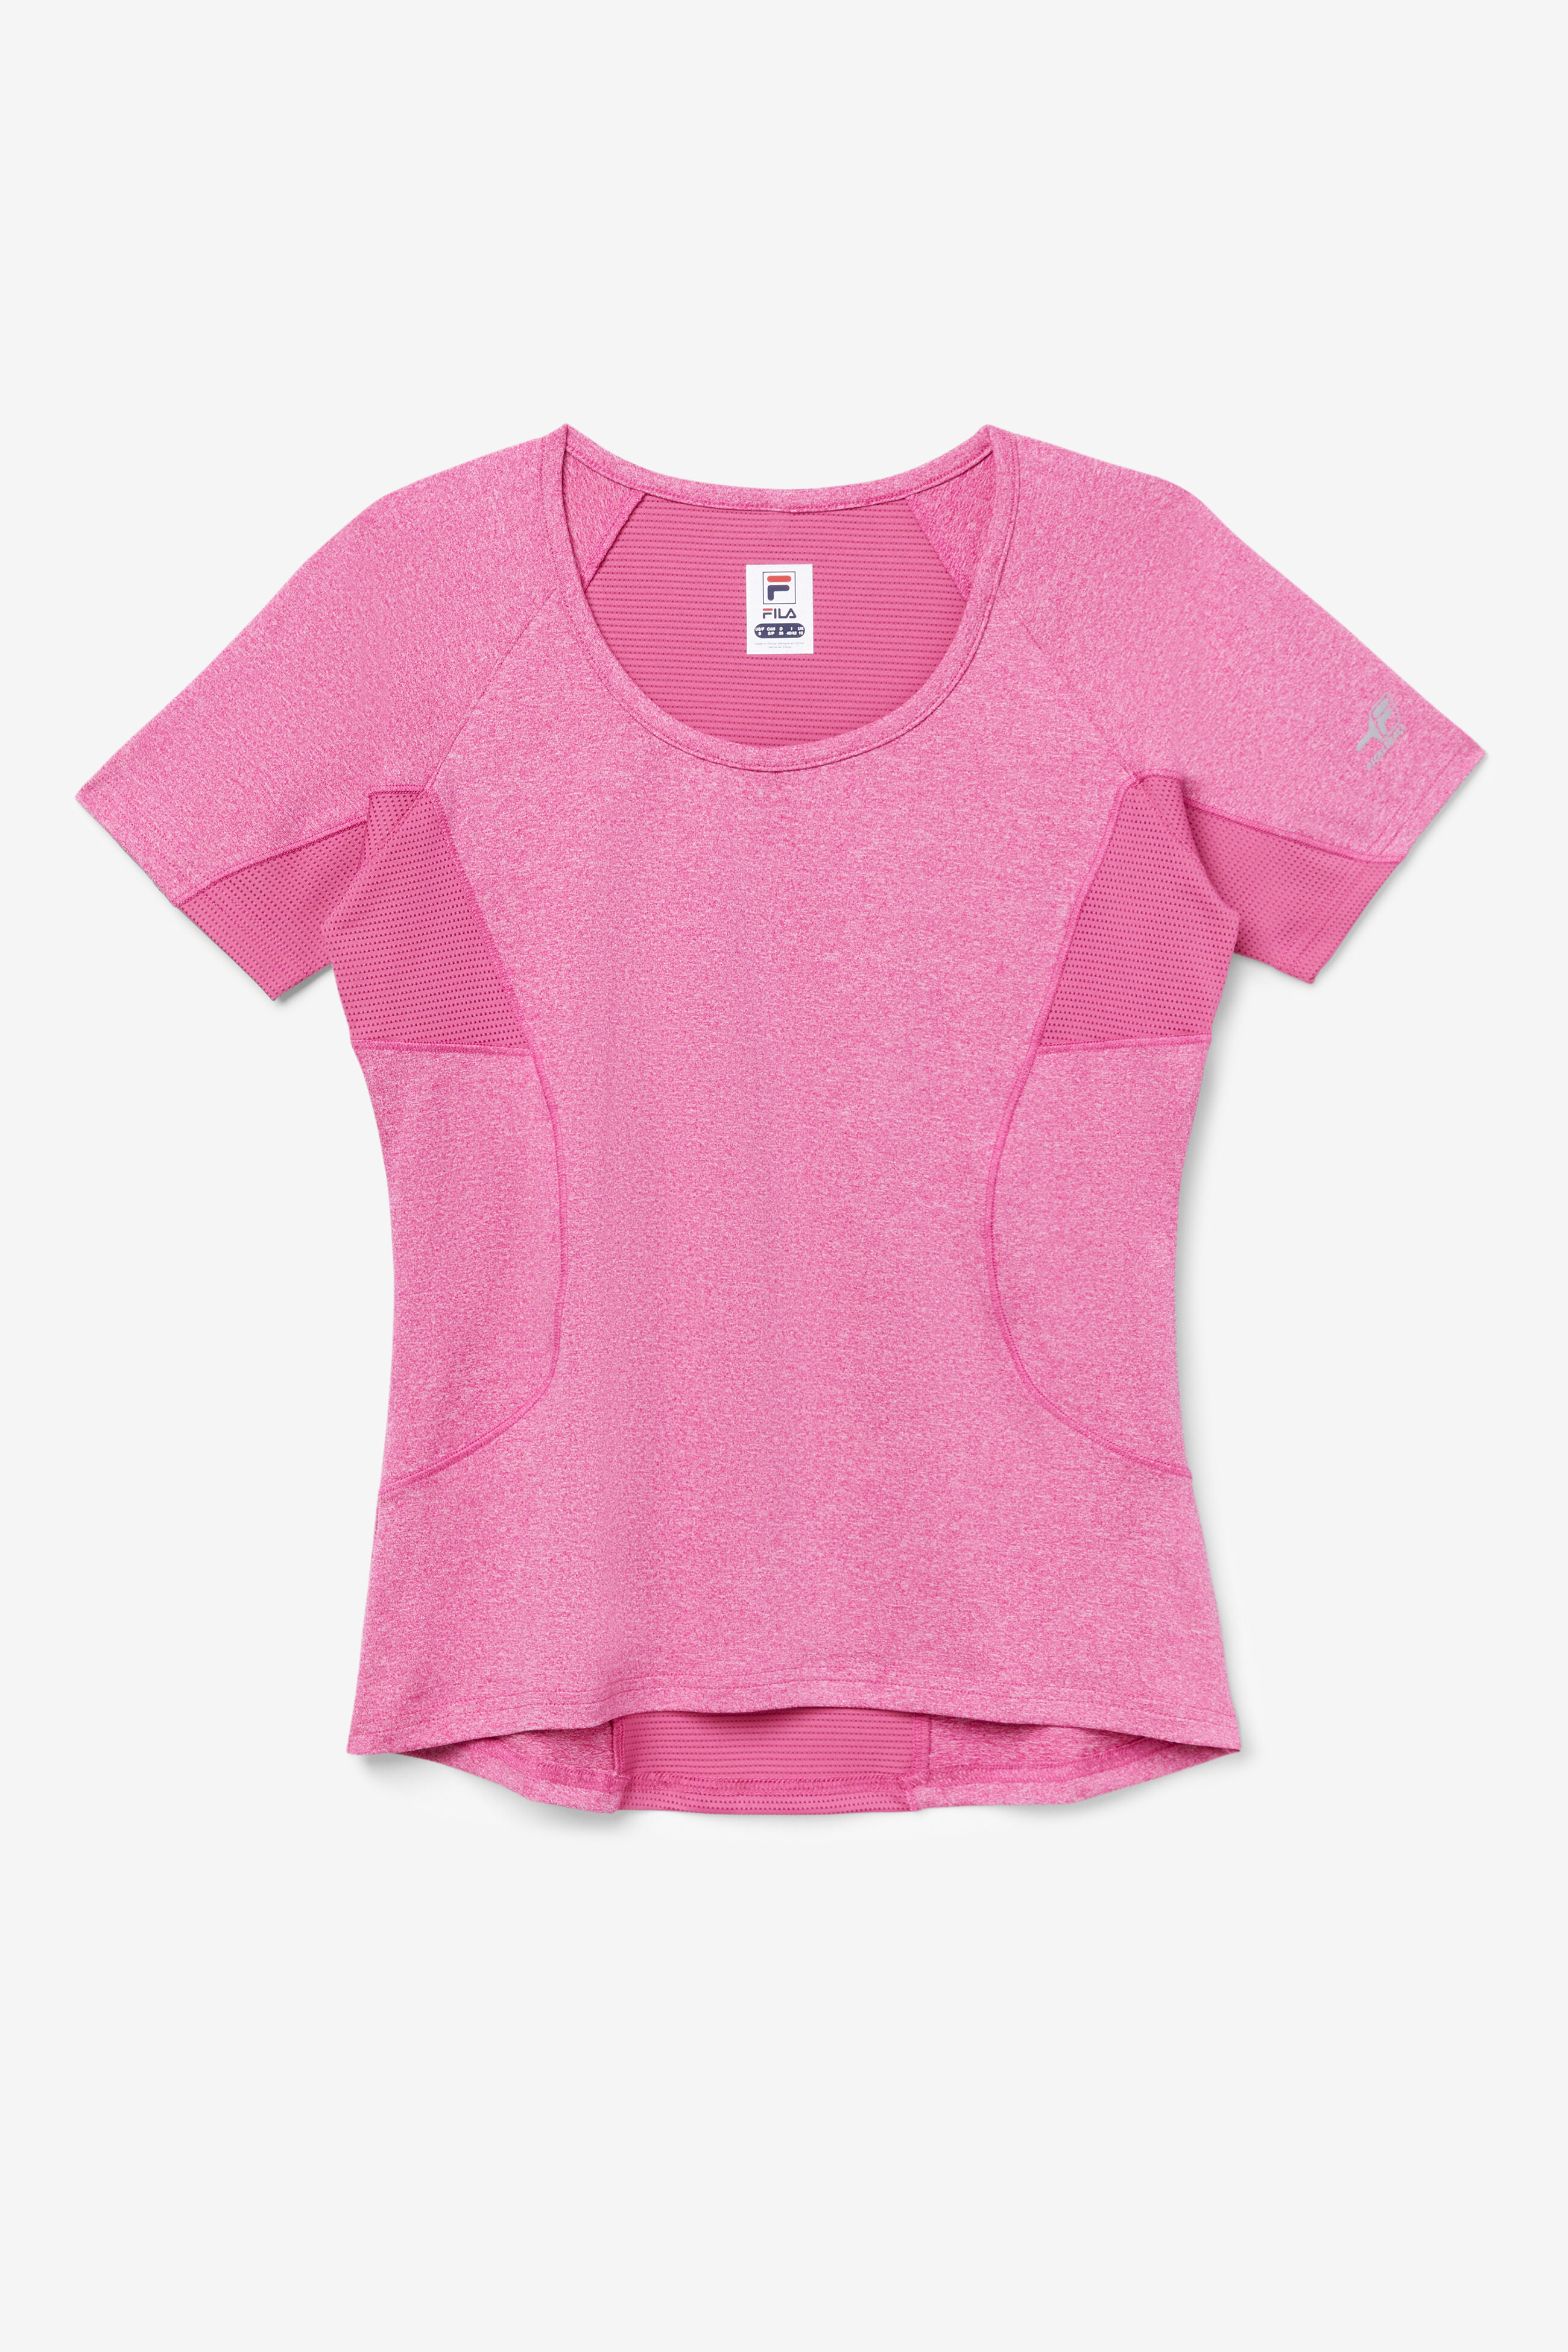 Women's Pickleball Short Sleeve Shirt | Fila 691115311596